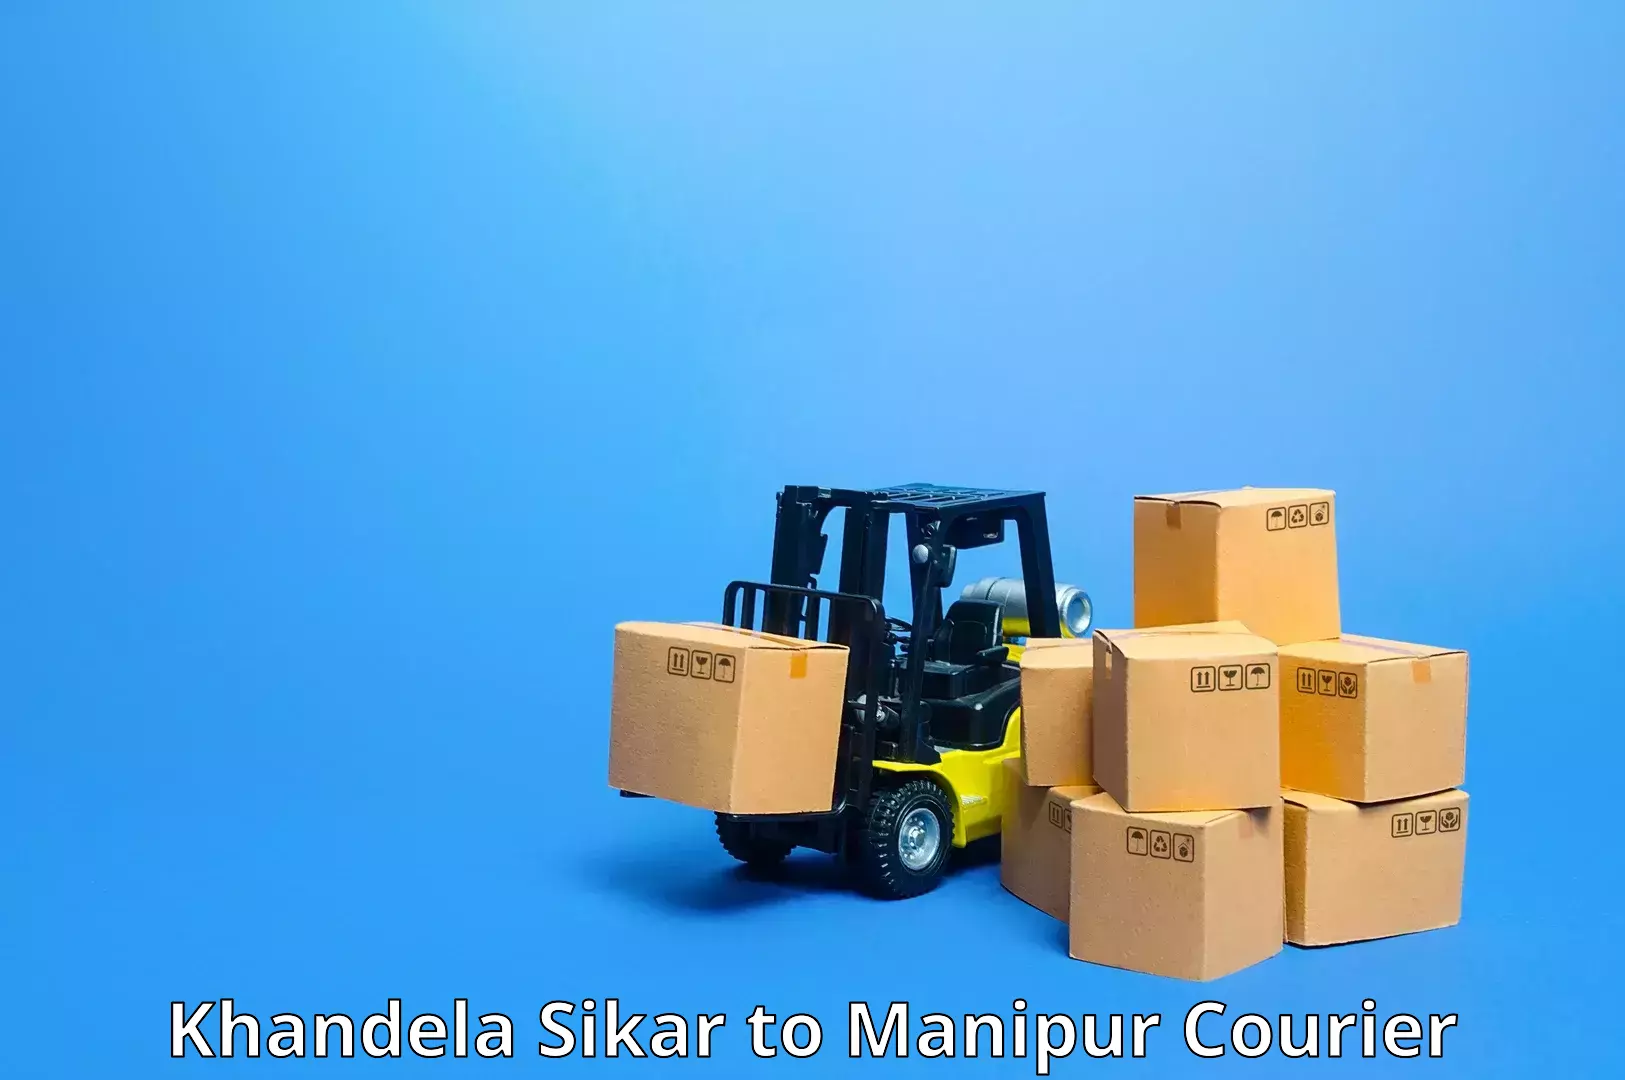 Nationwide shipping capabilities Khandela Sikar to Manipur